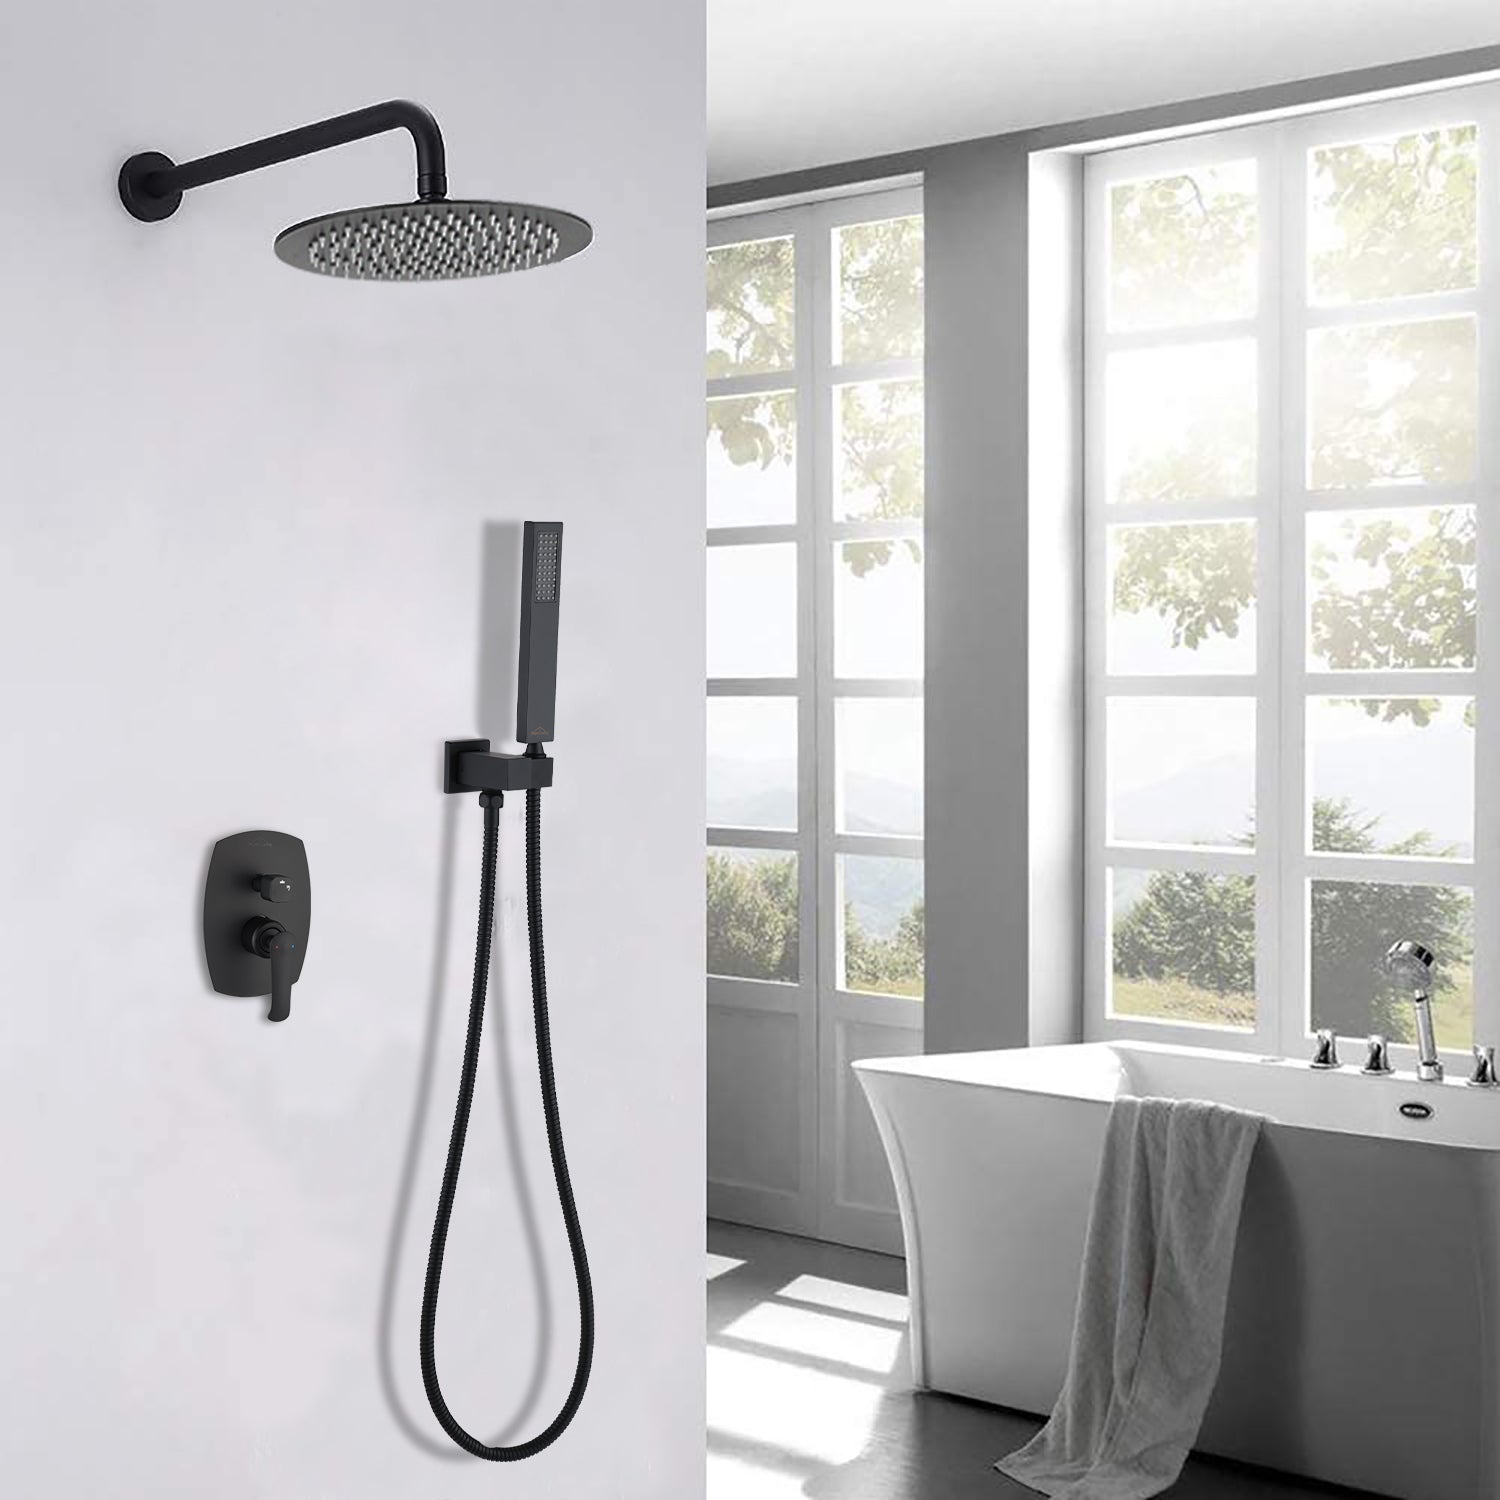 Boyel Living Shower System